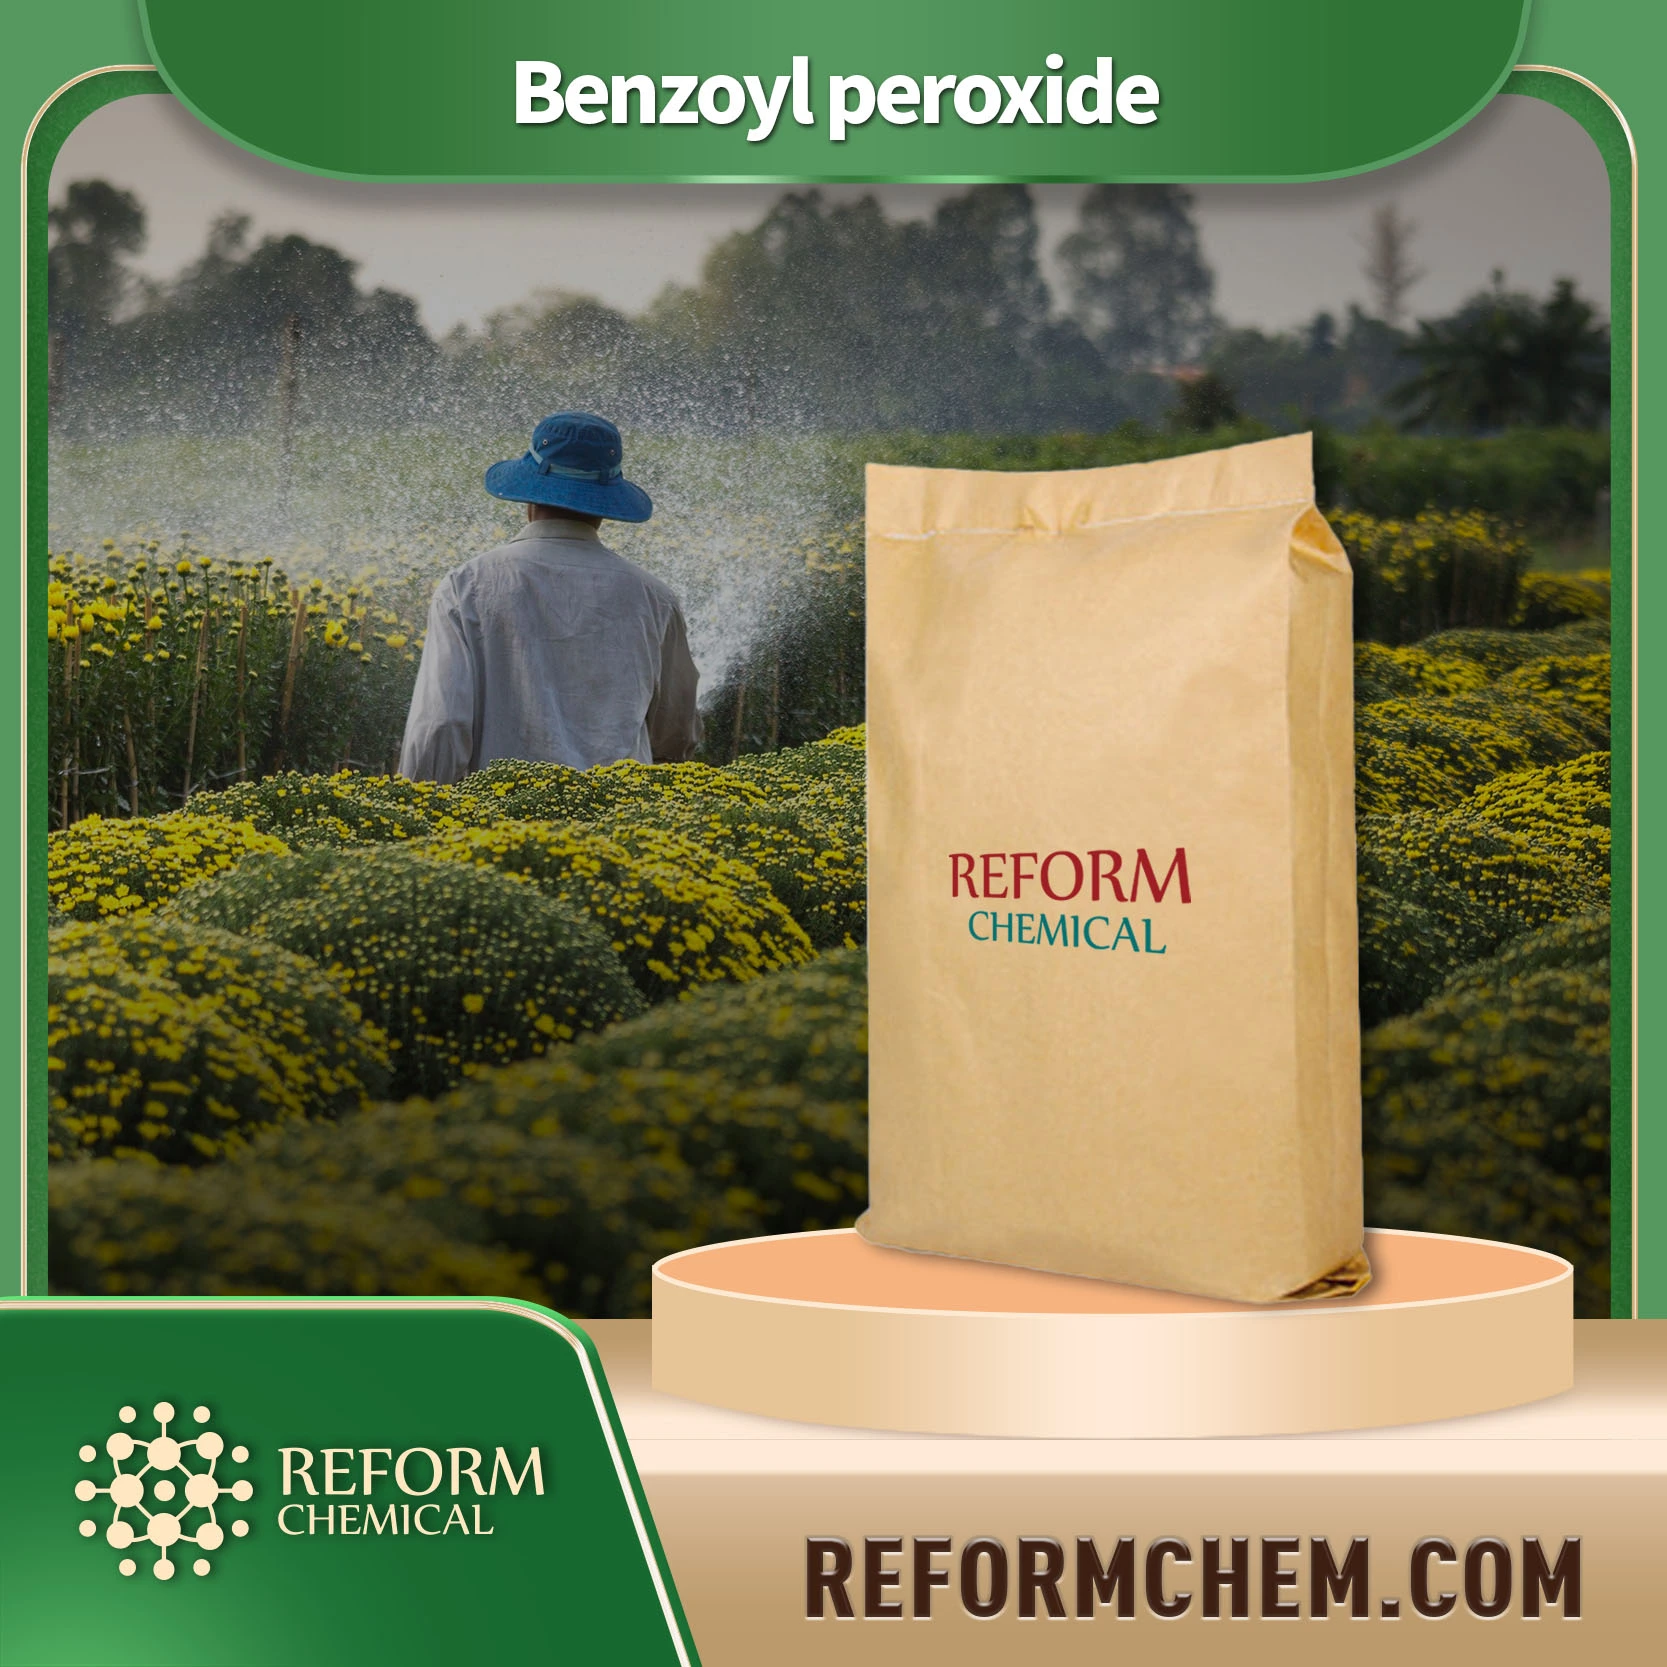 benzoyl peroxide94 36 0